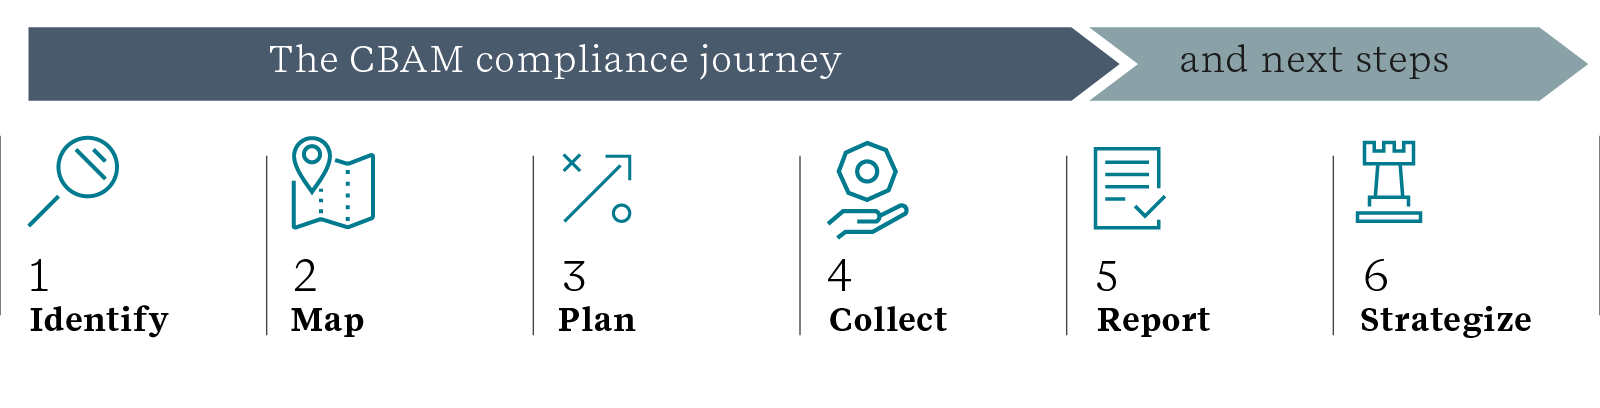 CBAM compliance journey